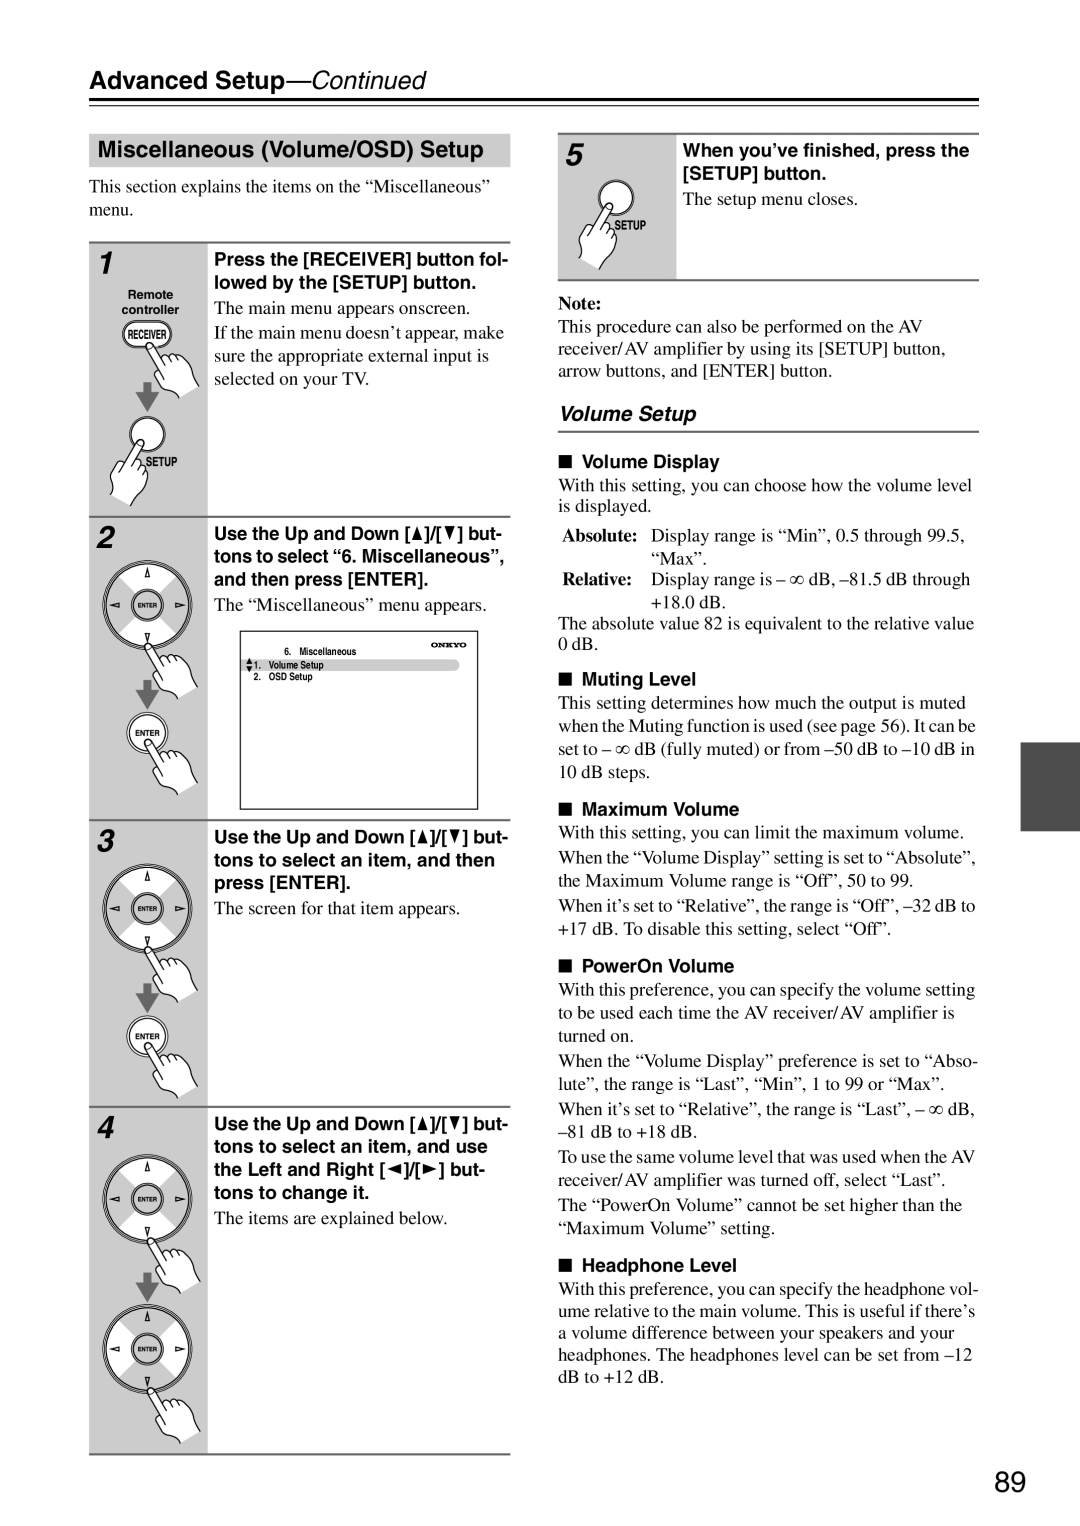 Onkyo TX-SA706 Miscellaneous Volume/OSD Setup, Volume Setup, Advanced Setup—Continued, The “Miscellaneous” menu appears 